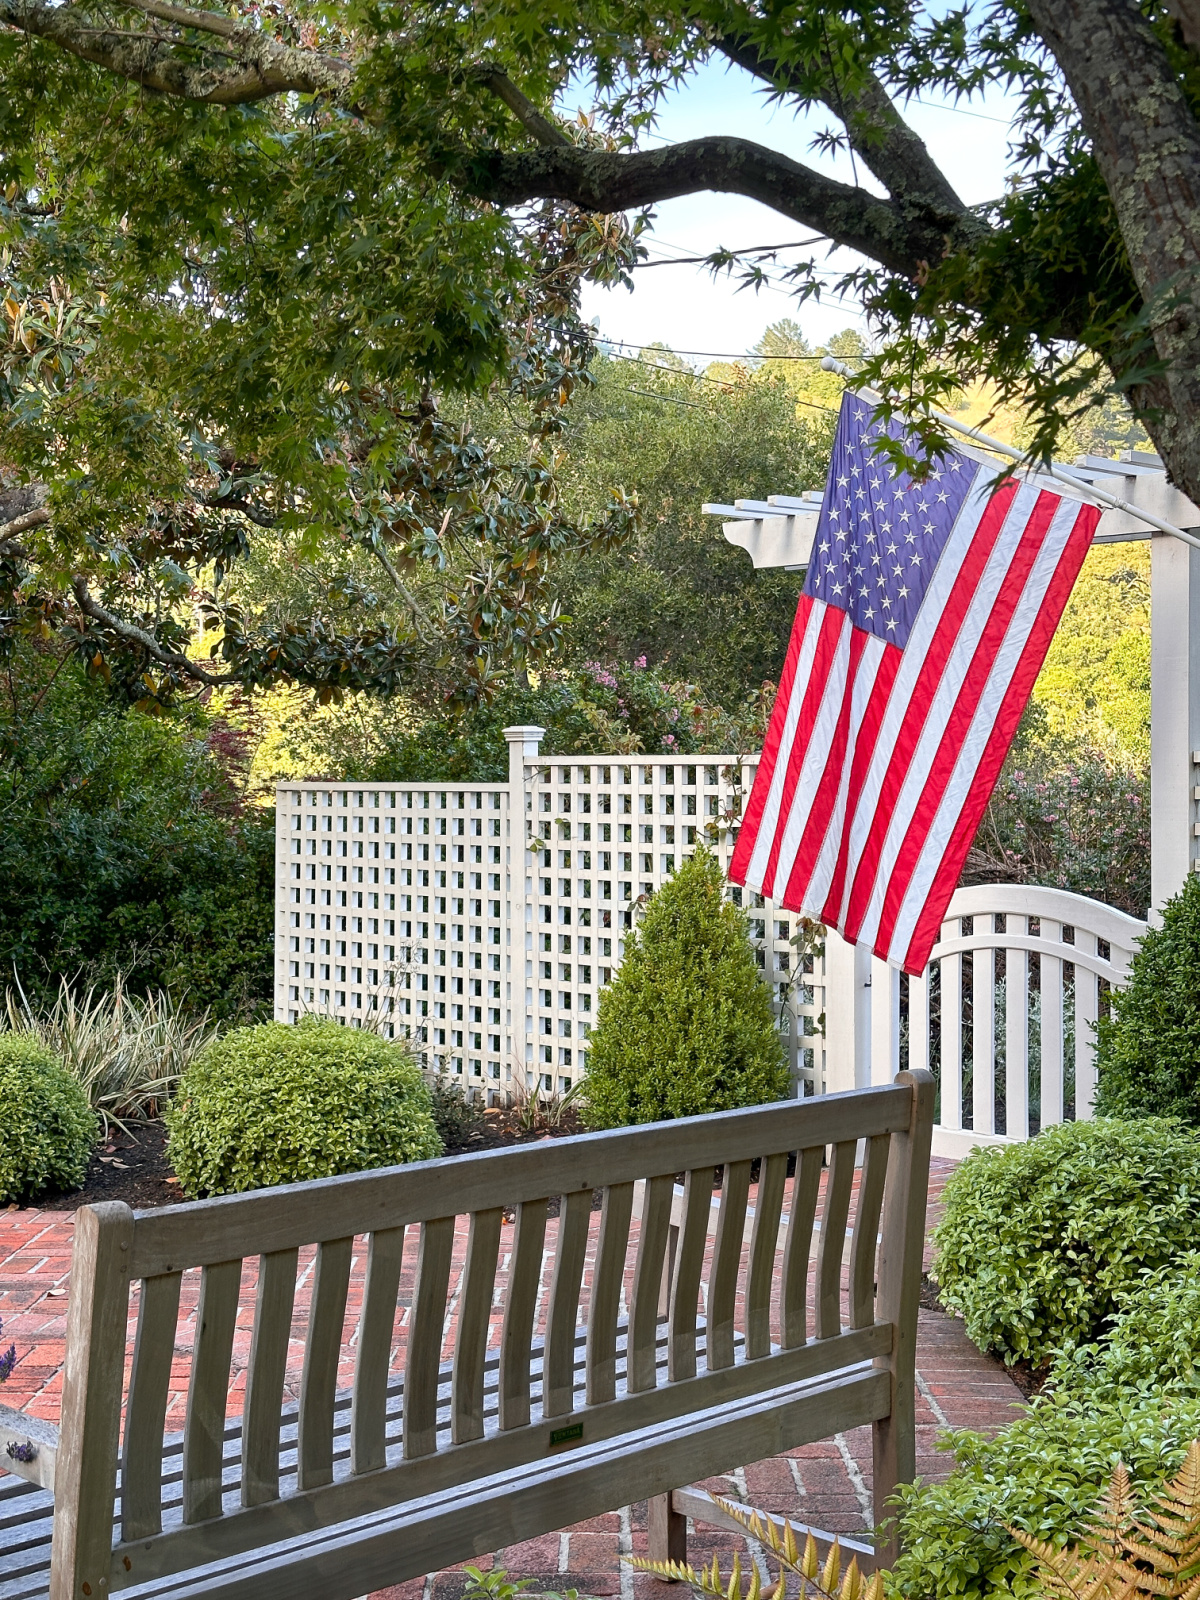 American flag flying outside home.